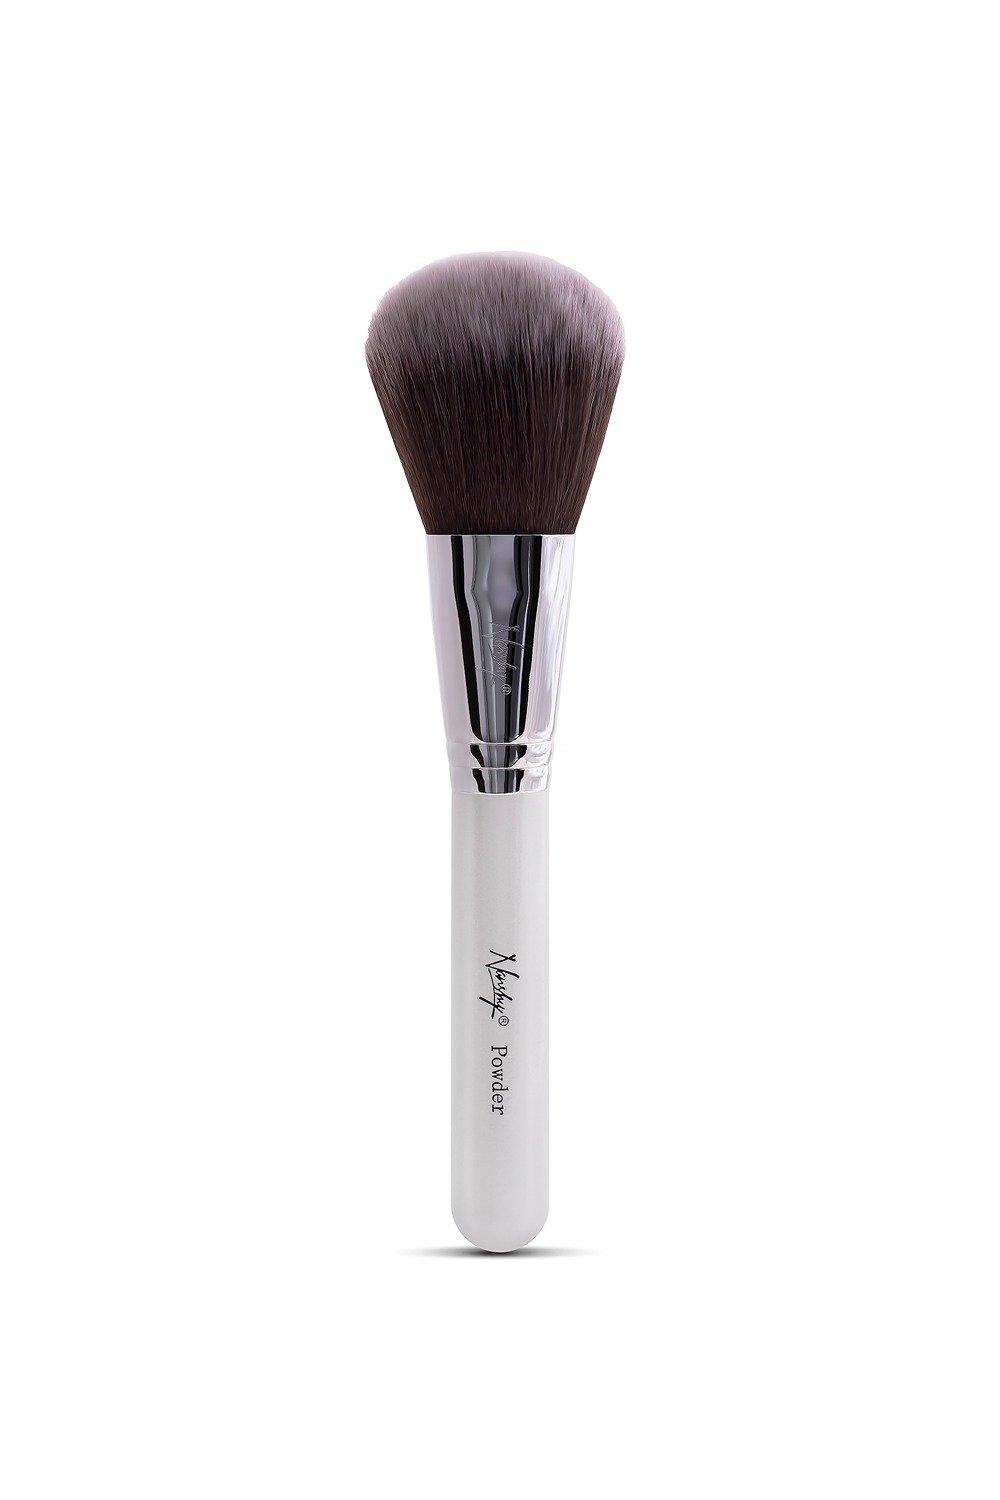 Nanshy Powder Face & Body Makeup Brush Pearlescent White|white